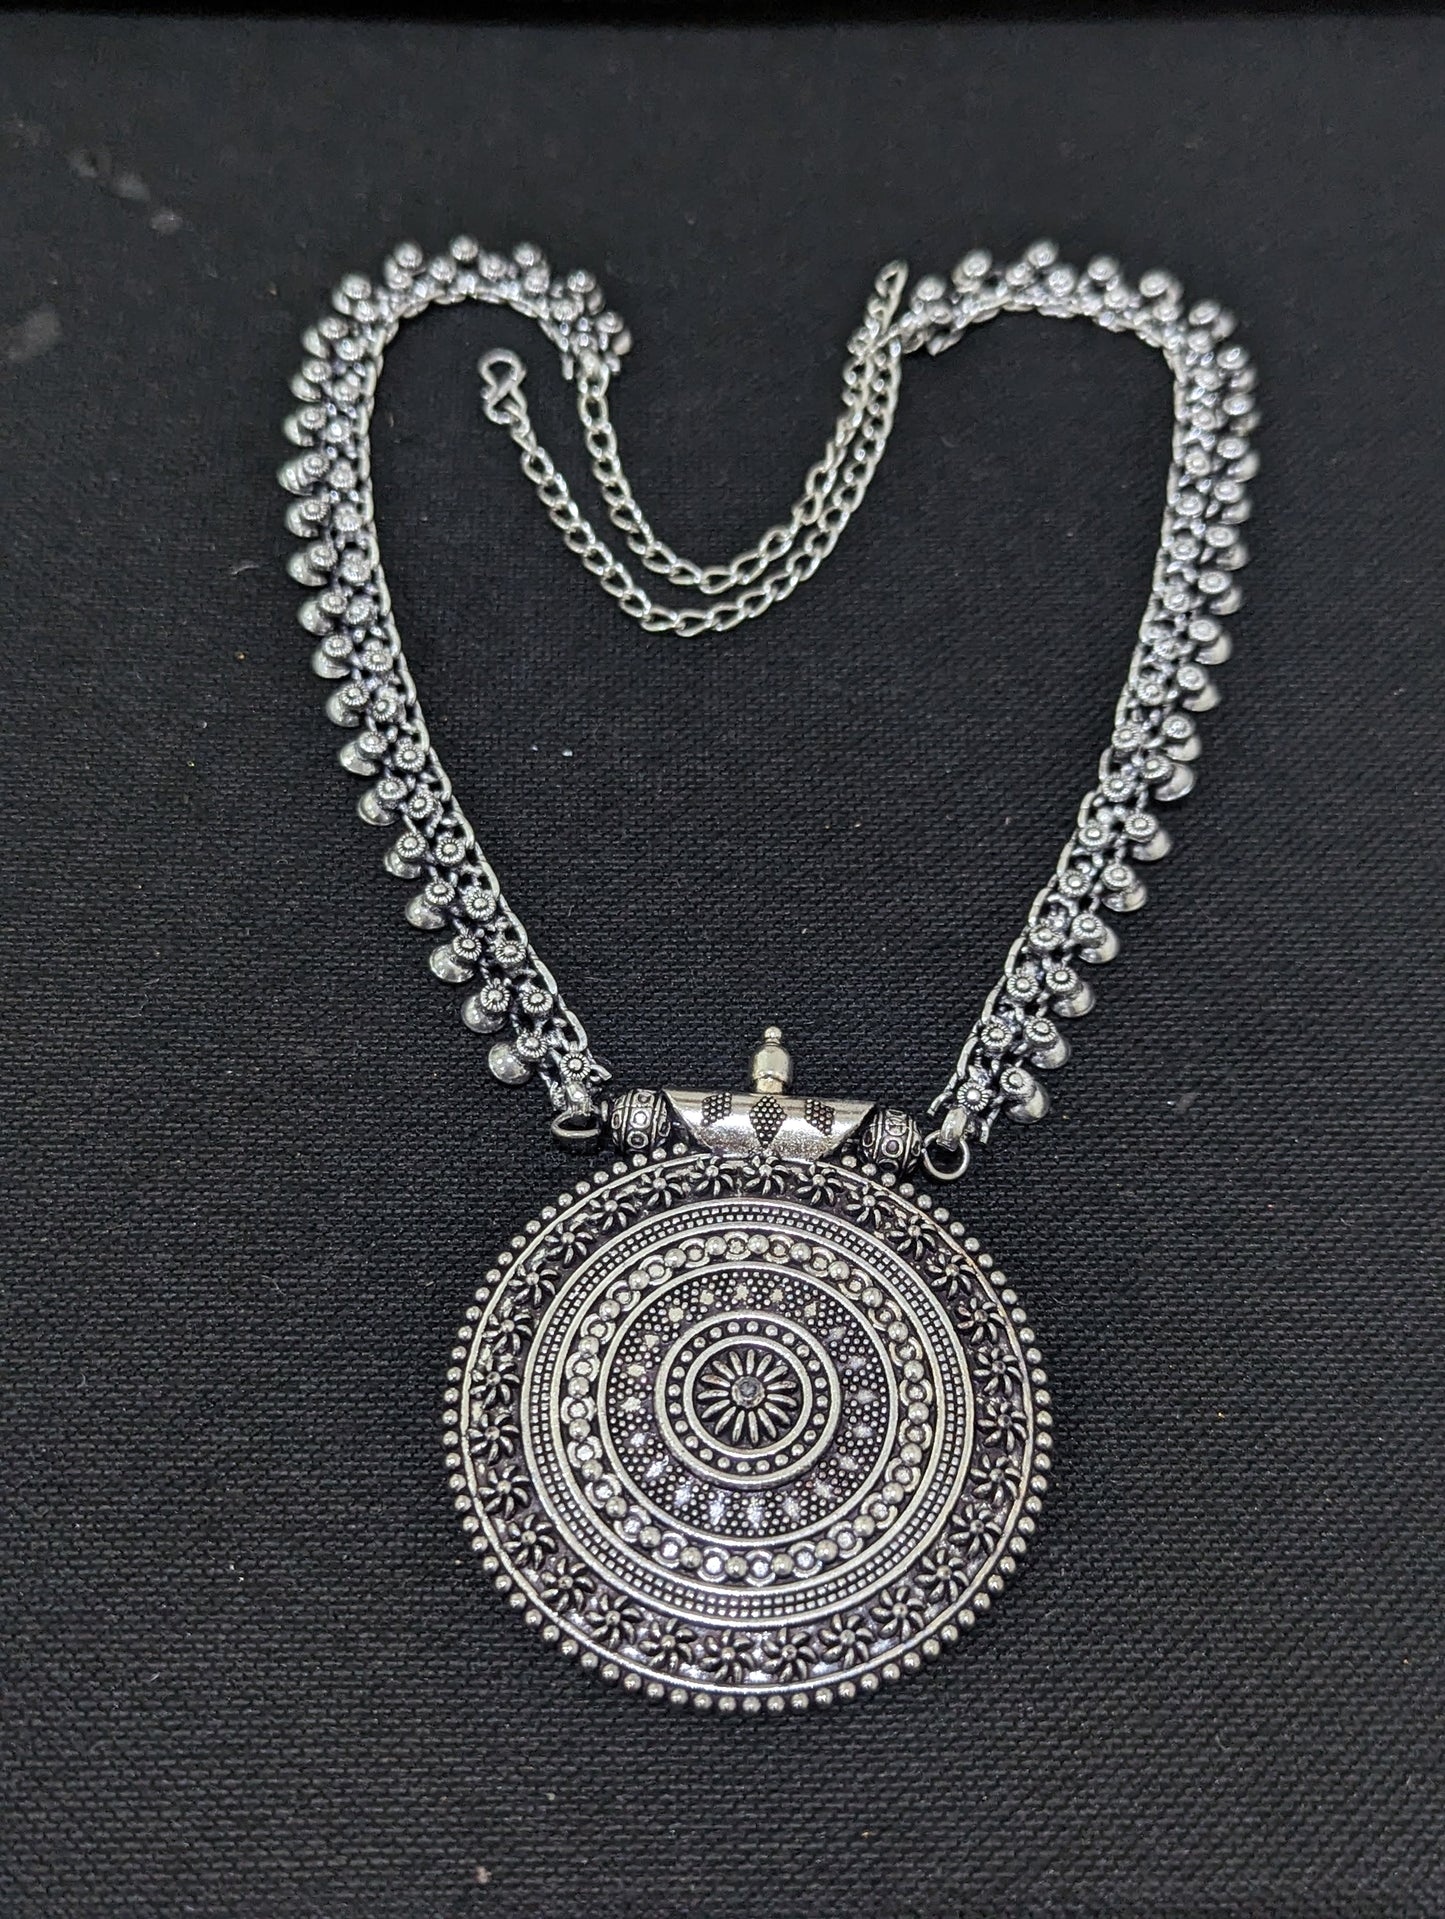 Oxidized Silver Long Chain Necklace - D1